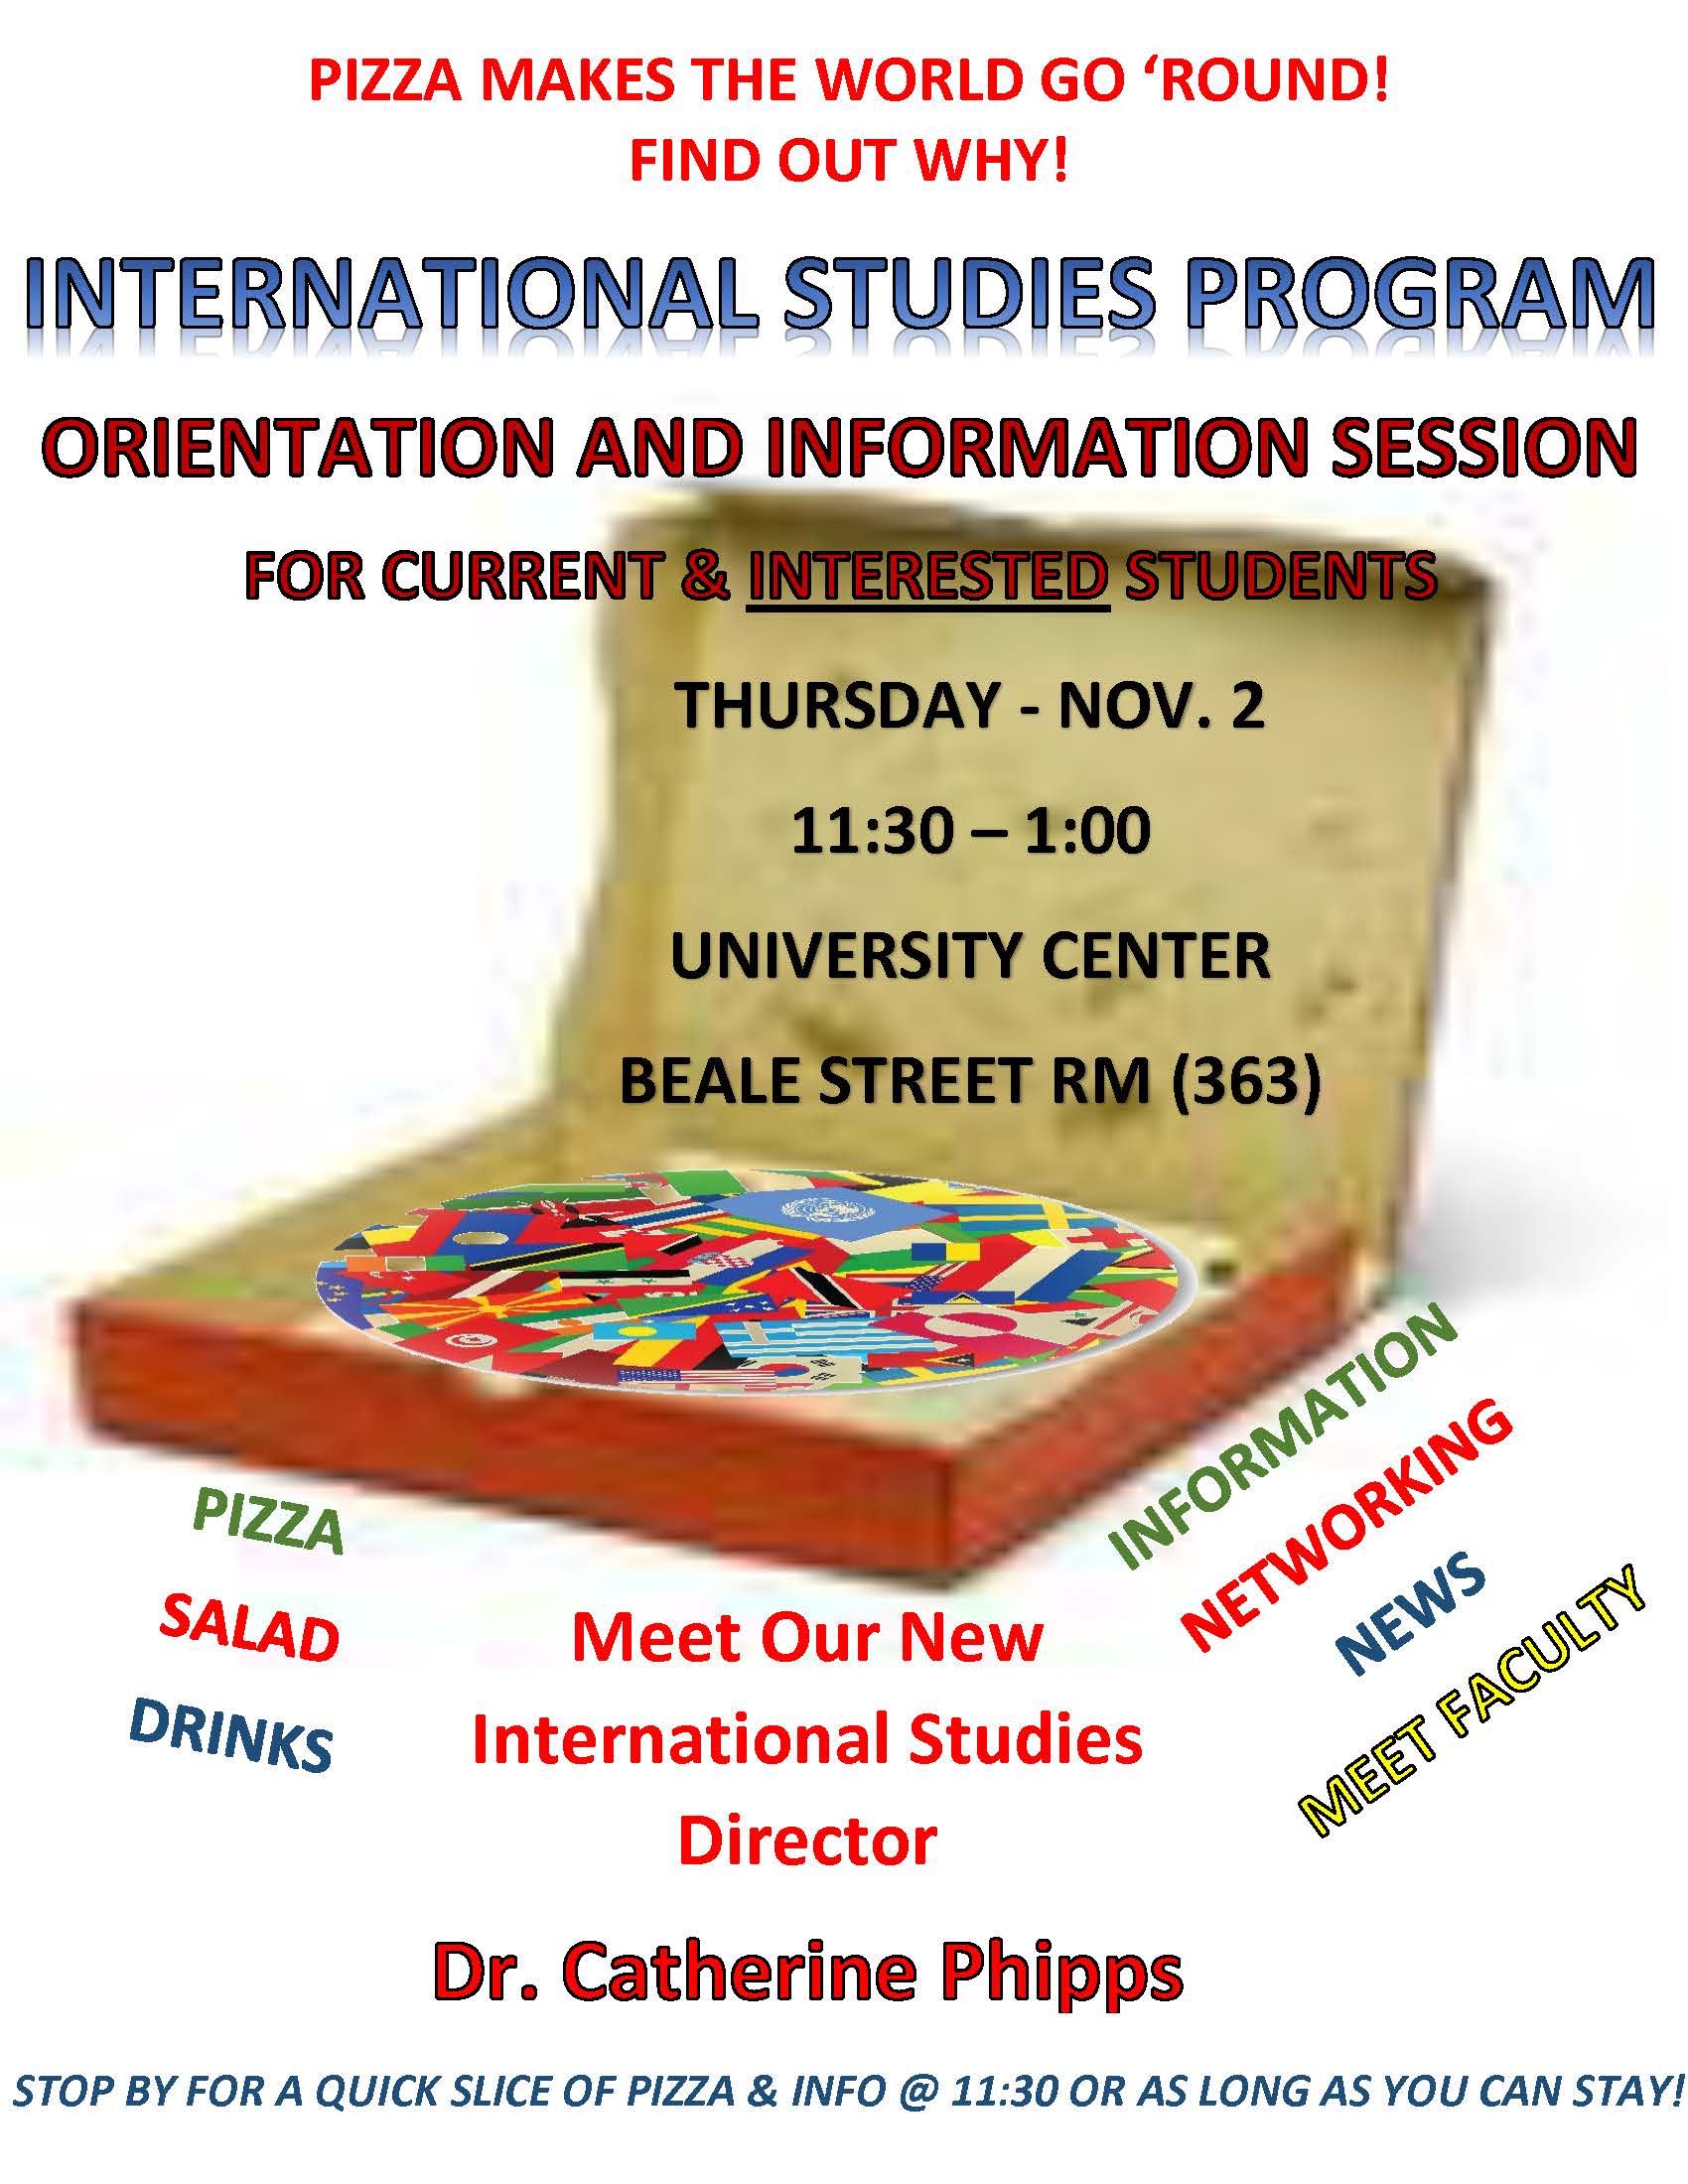 International Studies Program